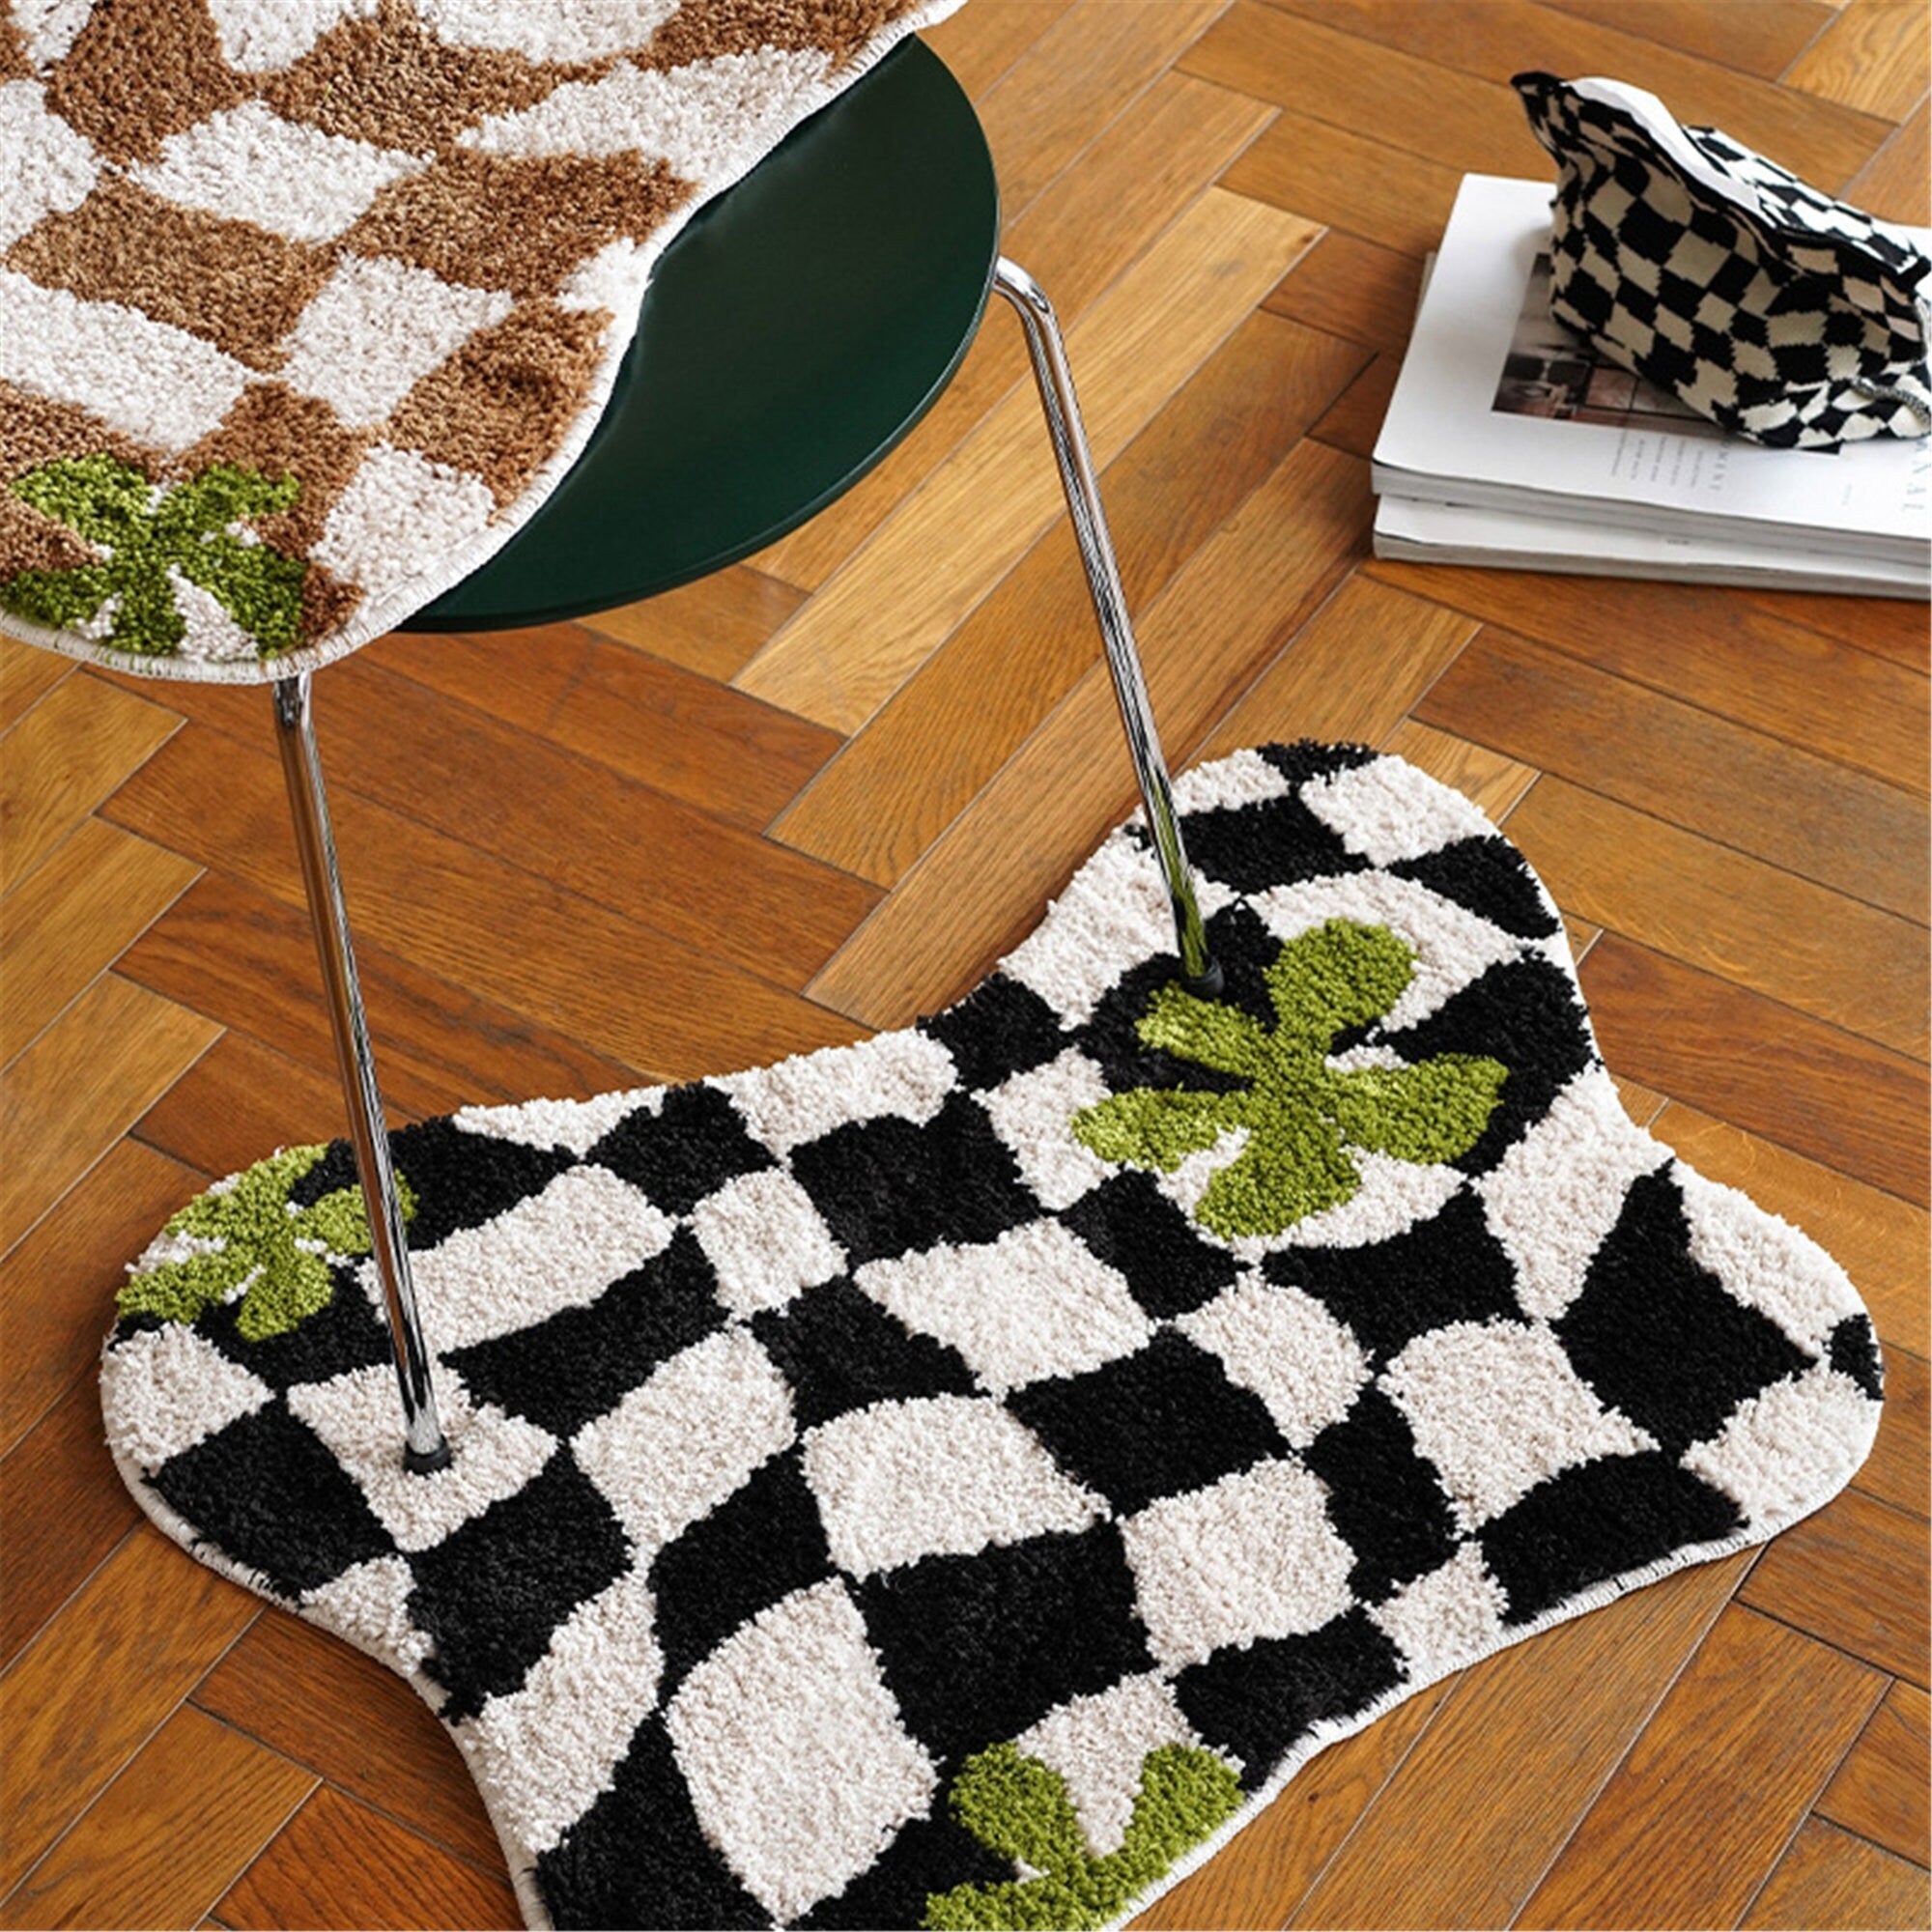 Tufted Checkered Rug, Irregular Shape Mats, Entryway Floor Decorative, Soft Bath Shower Mat, Absorbent Non Slip Bathroom Rugs, Fluffy Carpet